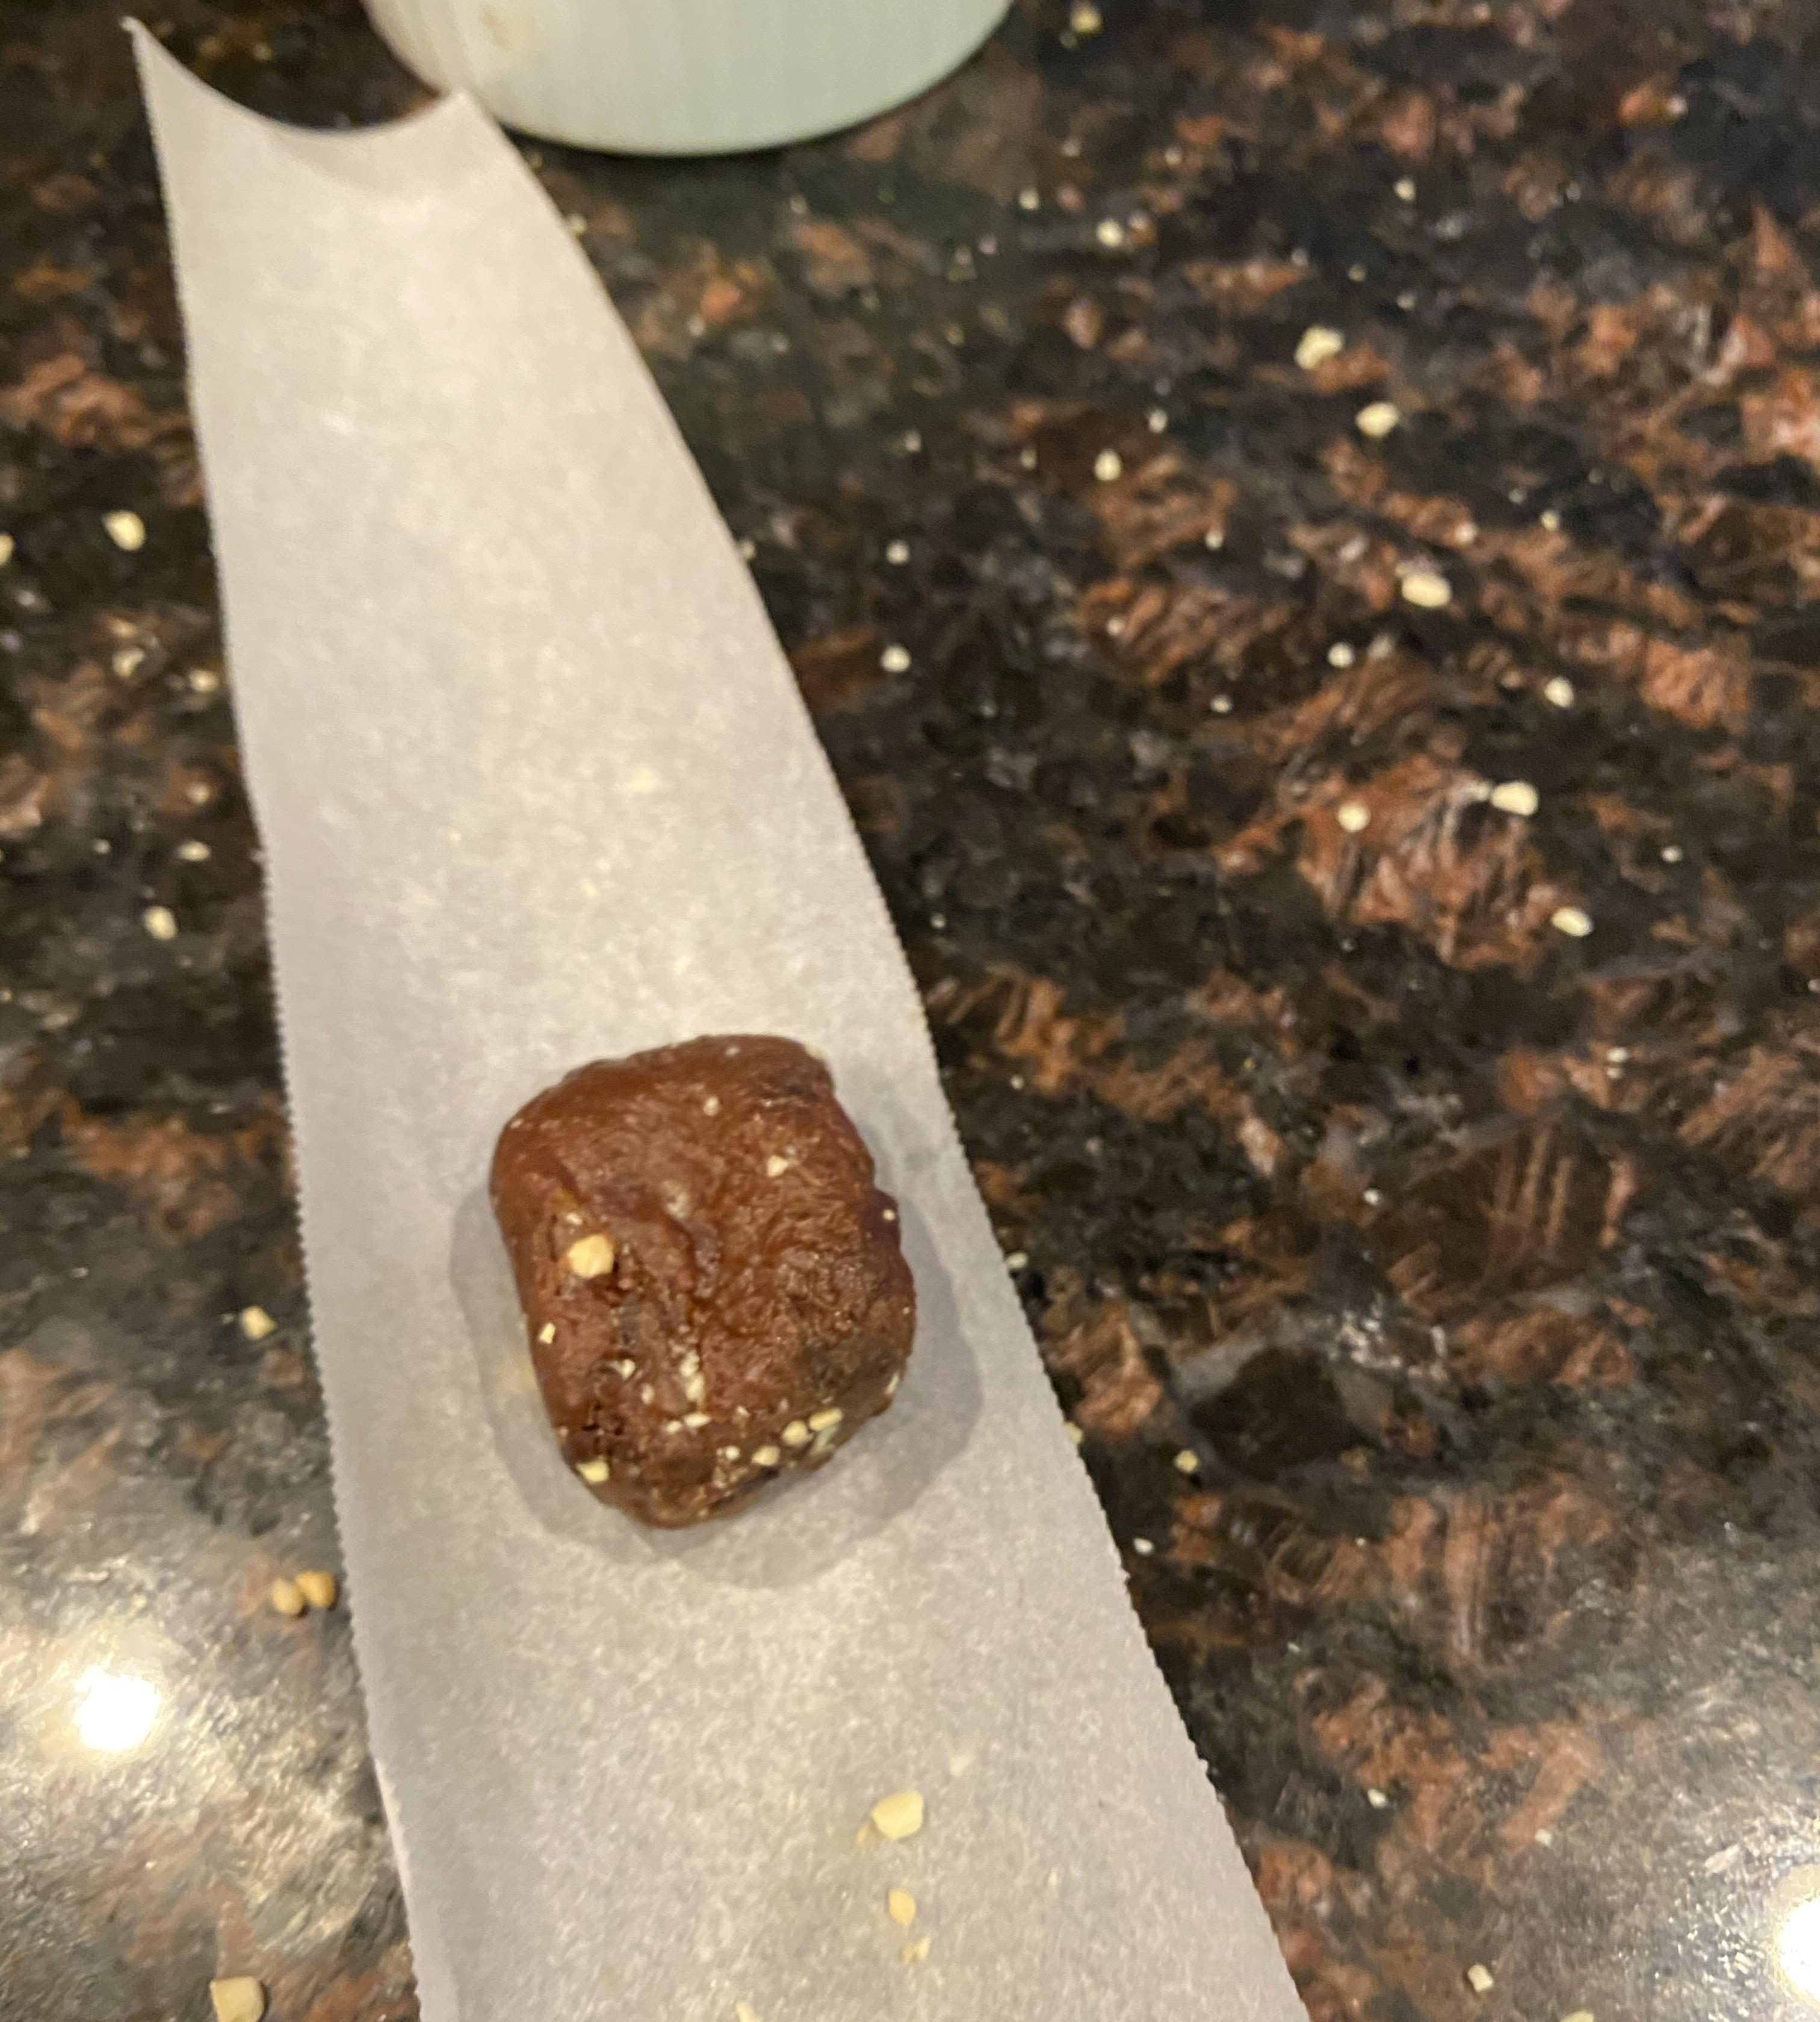 Creating a Chocolate-Carmel Candy